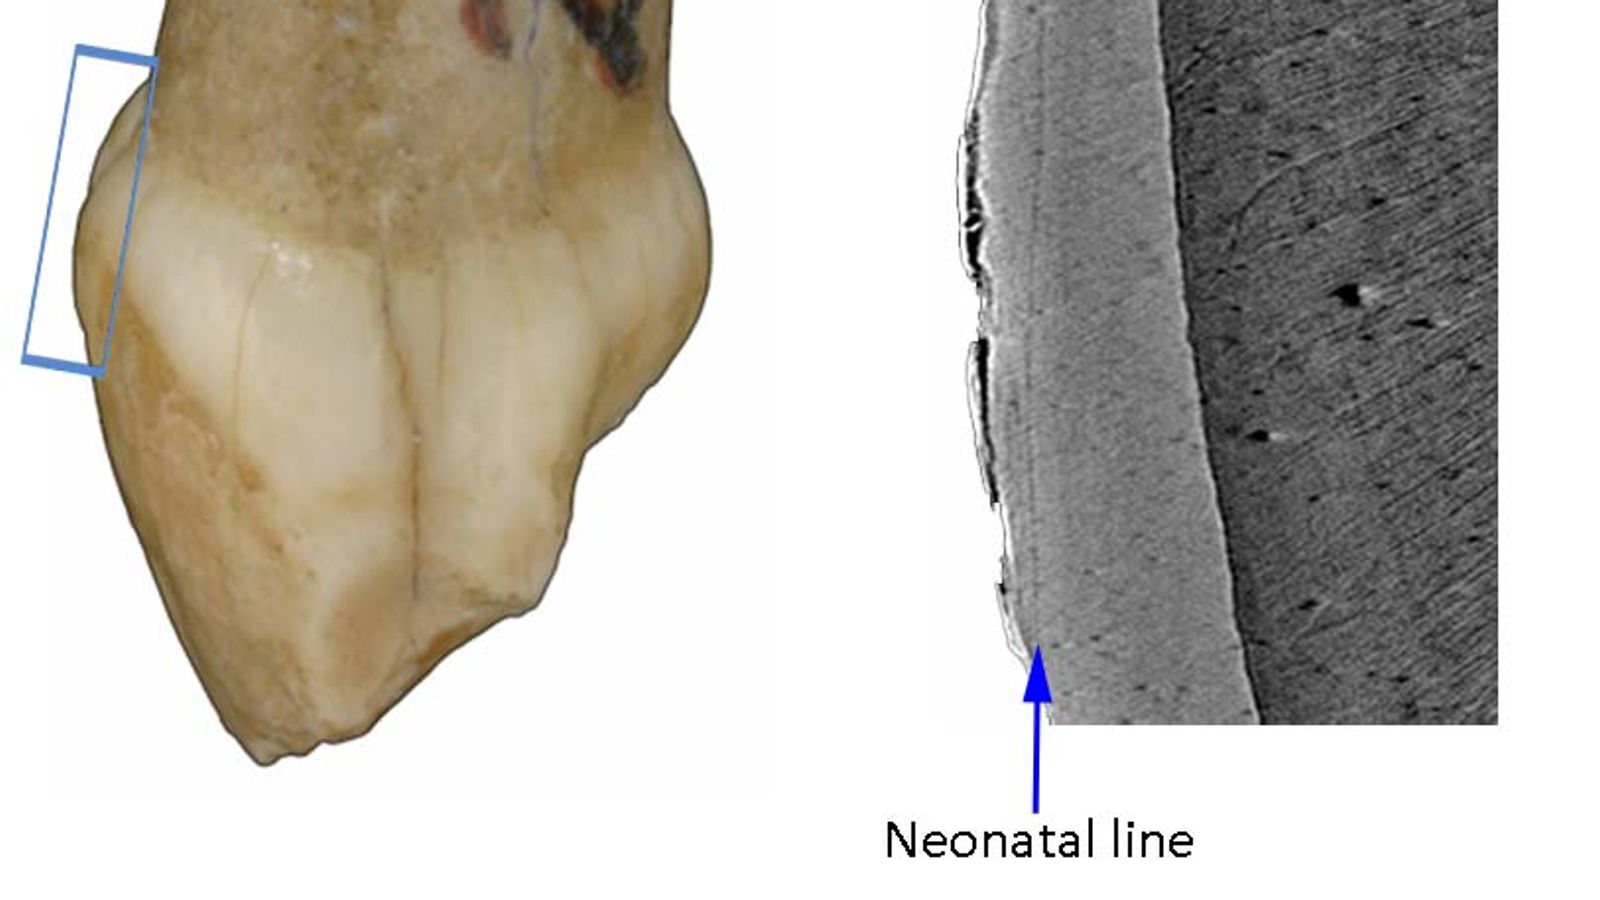 Neanderthal children may have cut their teeth earlier than modern humans